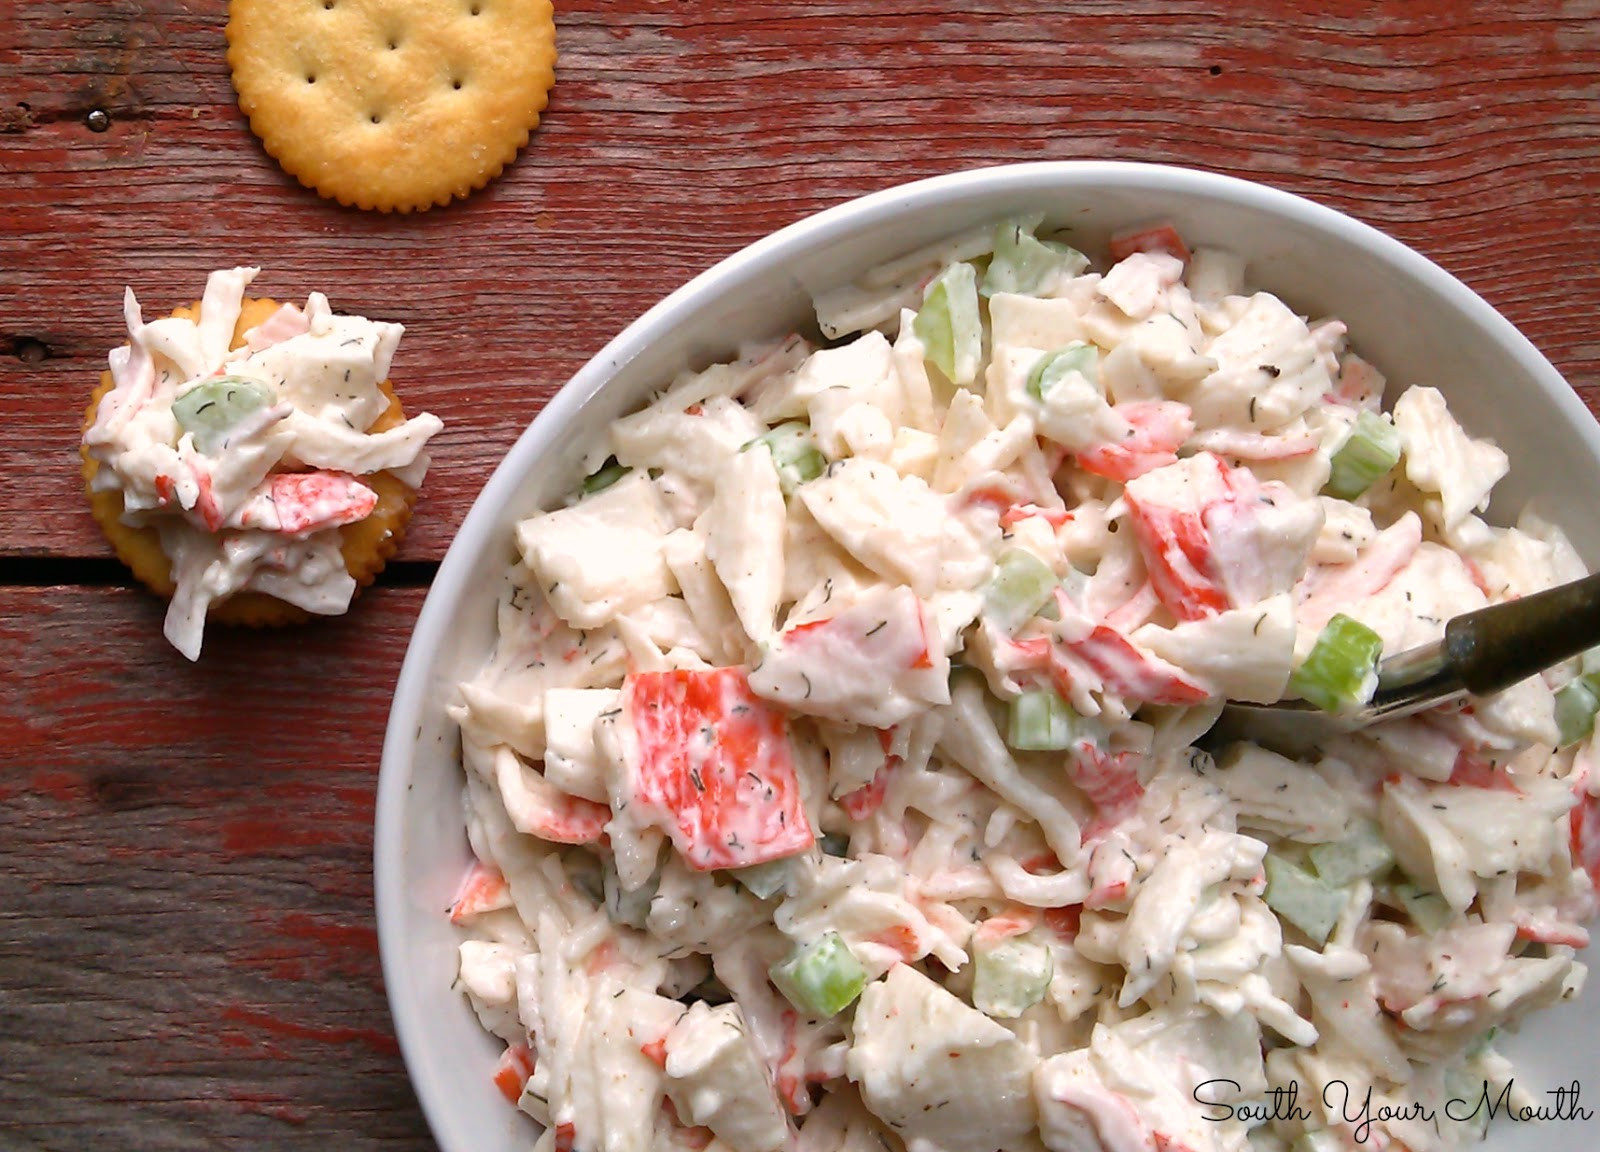 Seafood Salad Recipe Imitation Crab And Shrimp
 South Your Mouth Seafood Salad